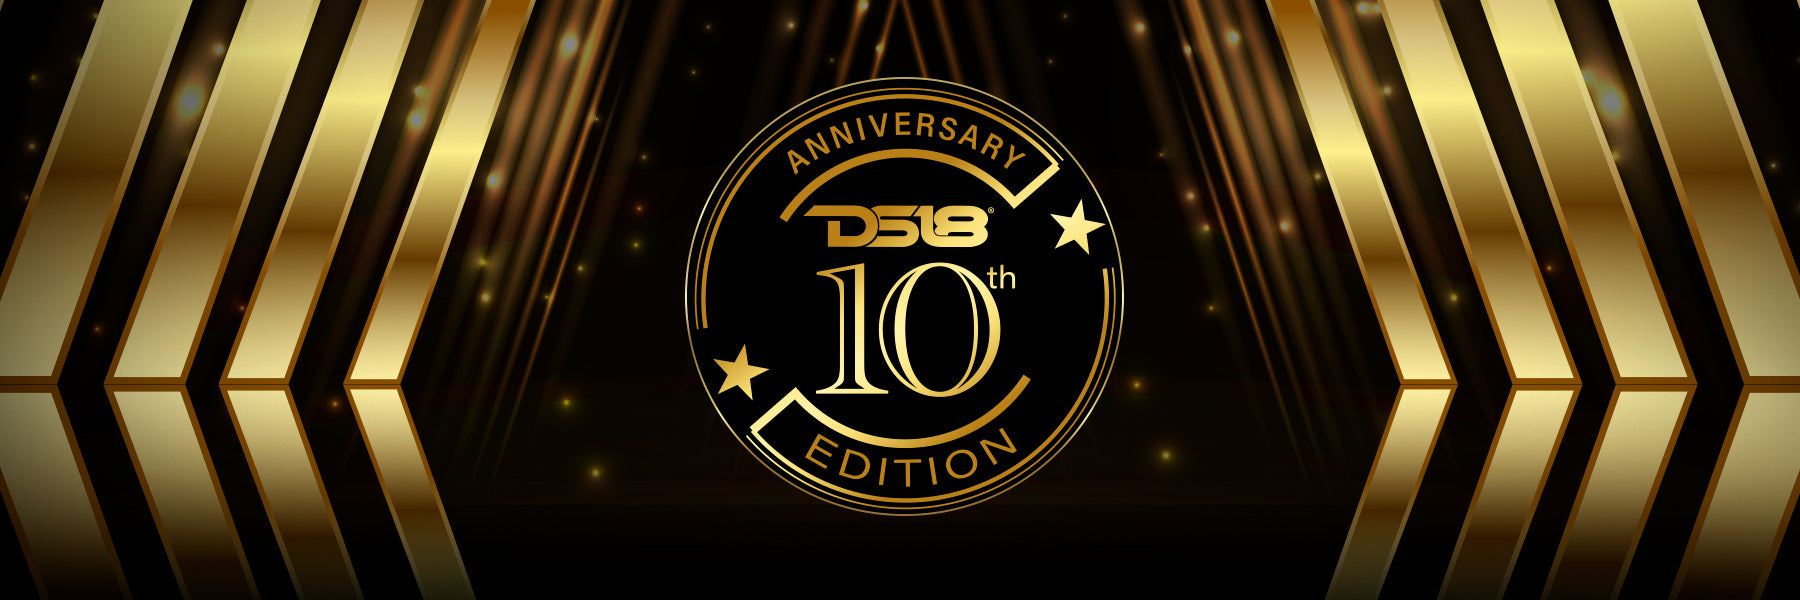 DS18’s 10th Anniversary